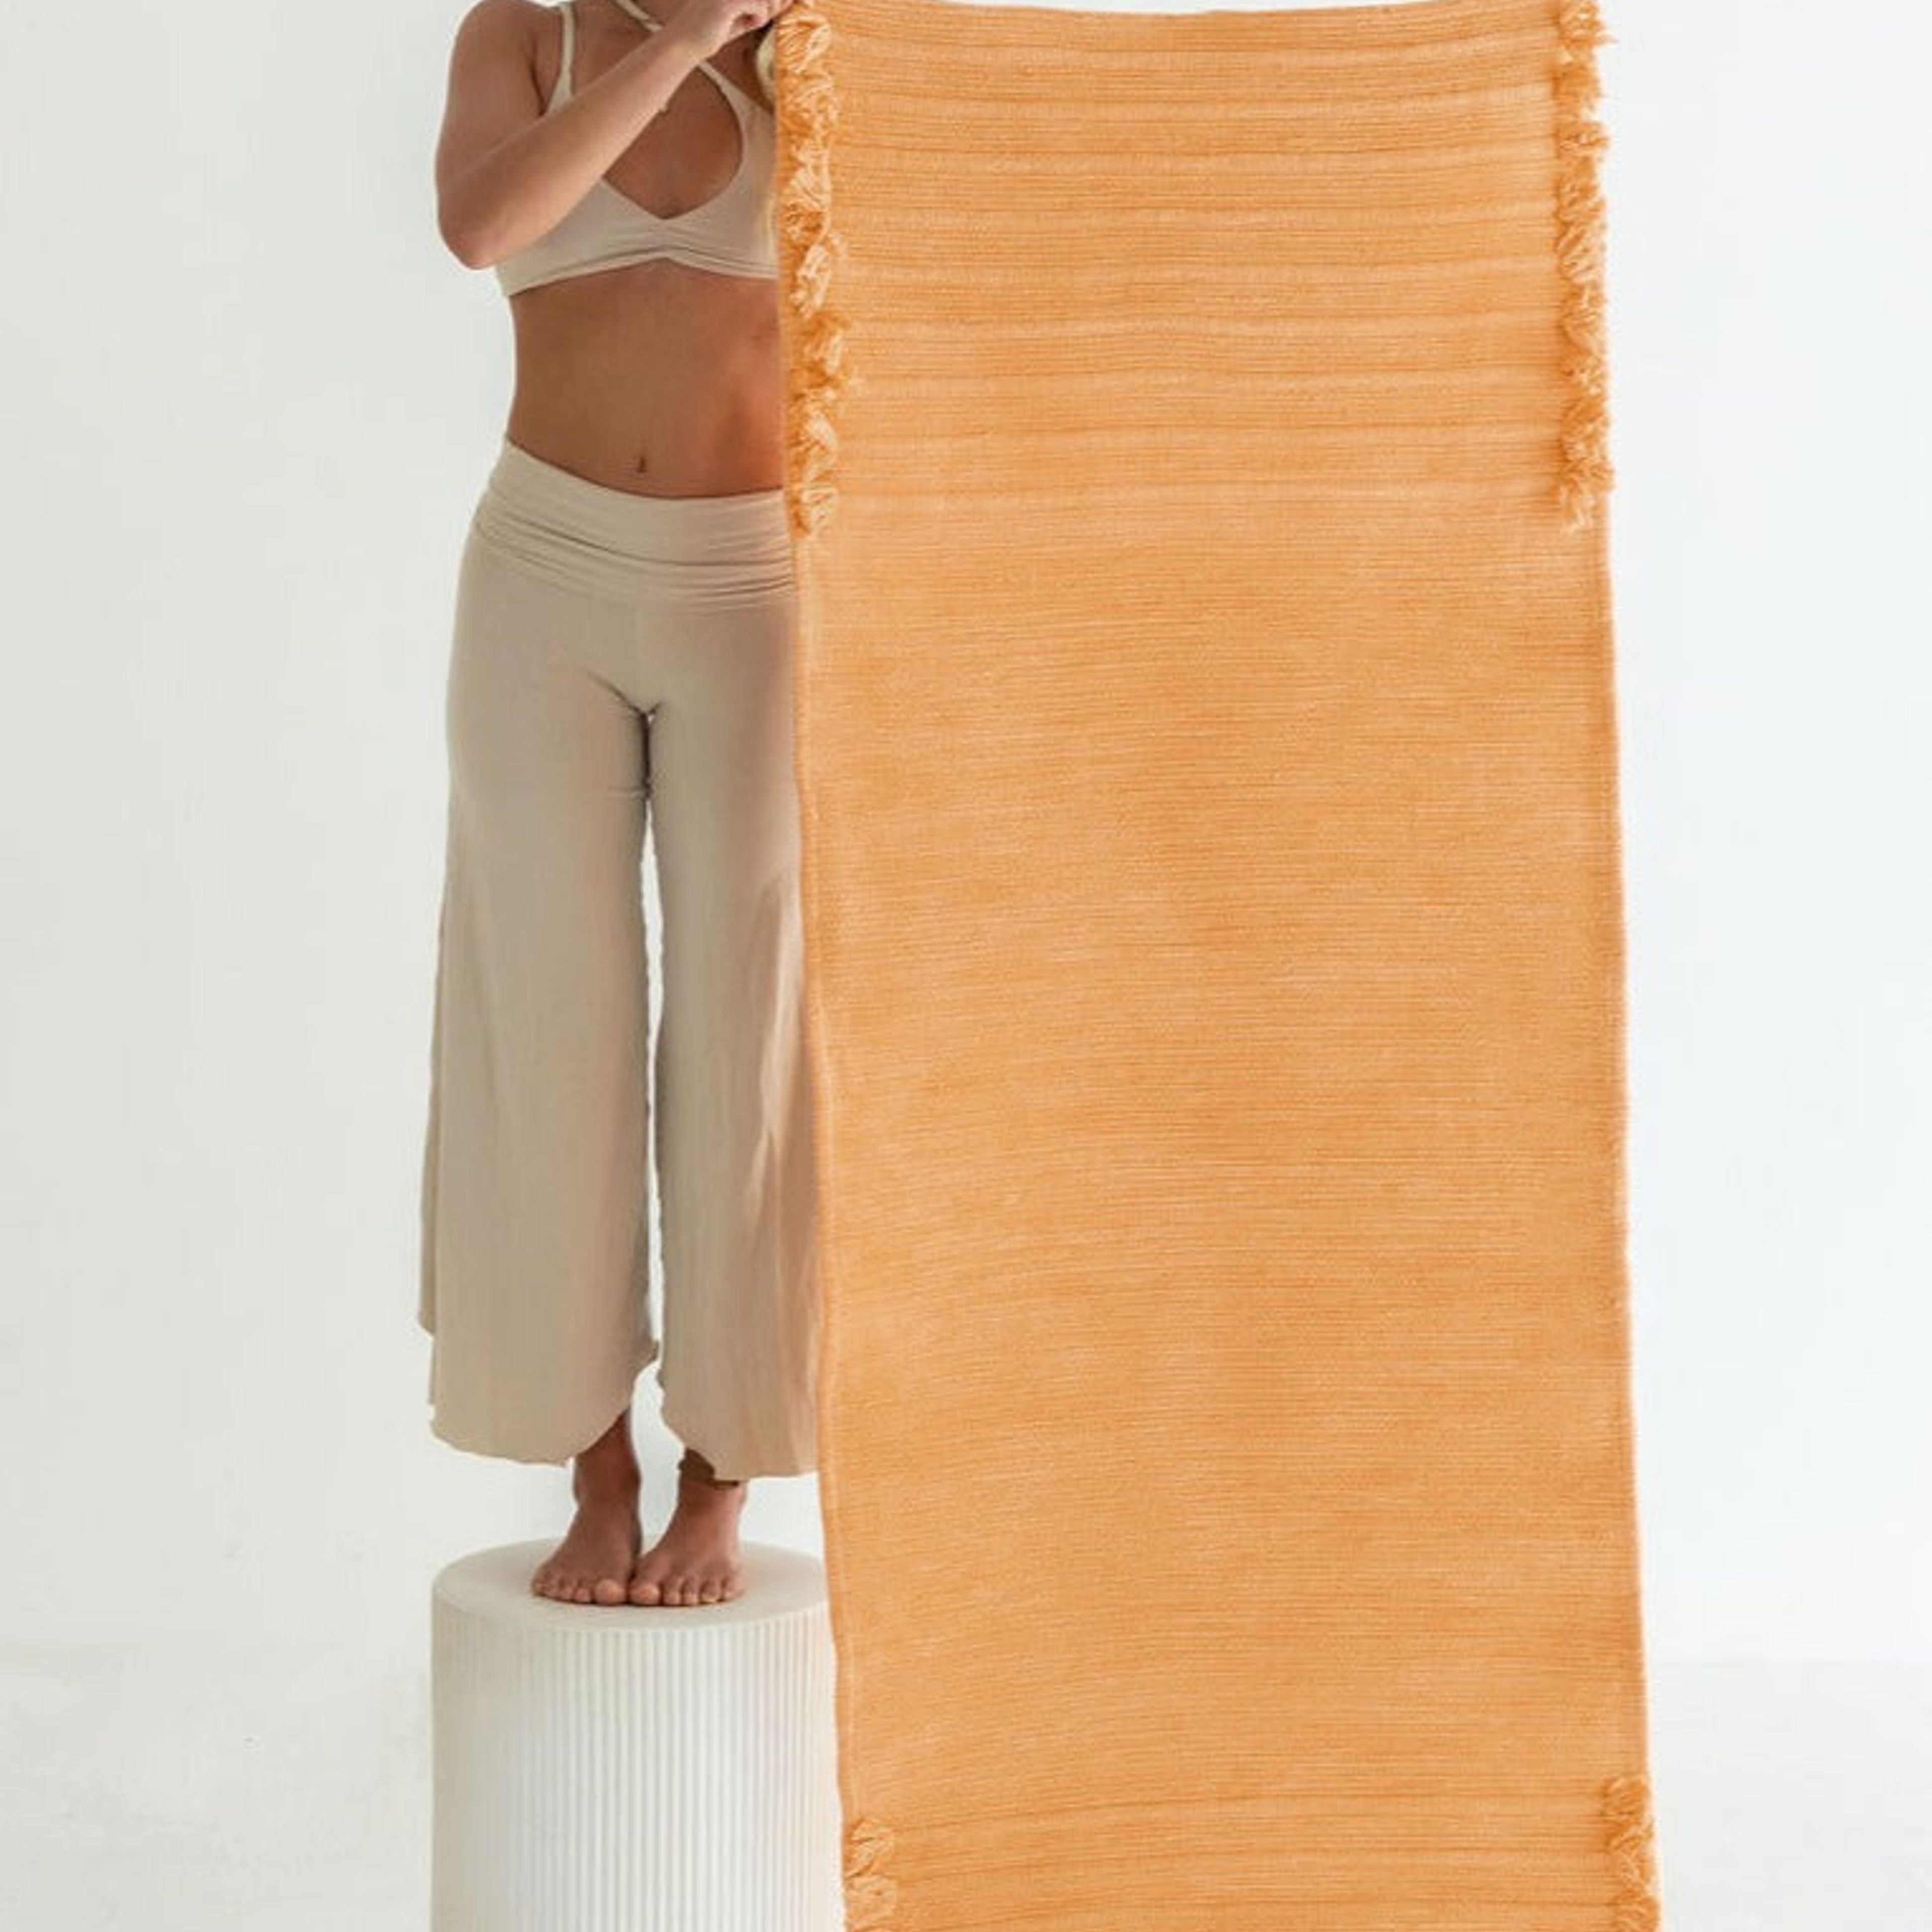 Sunstone - Naturally Dyed Herbal Yoga Mat